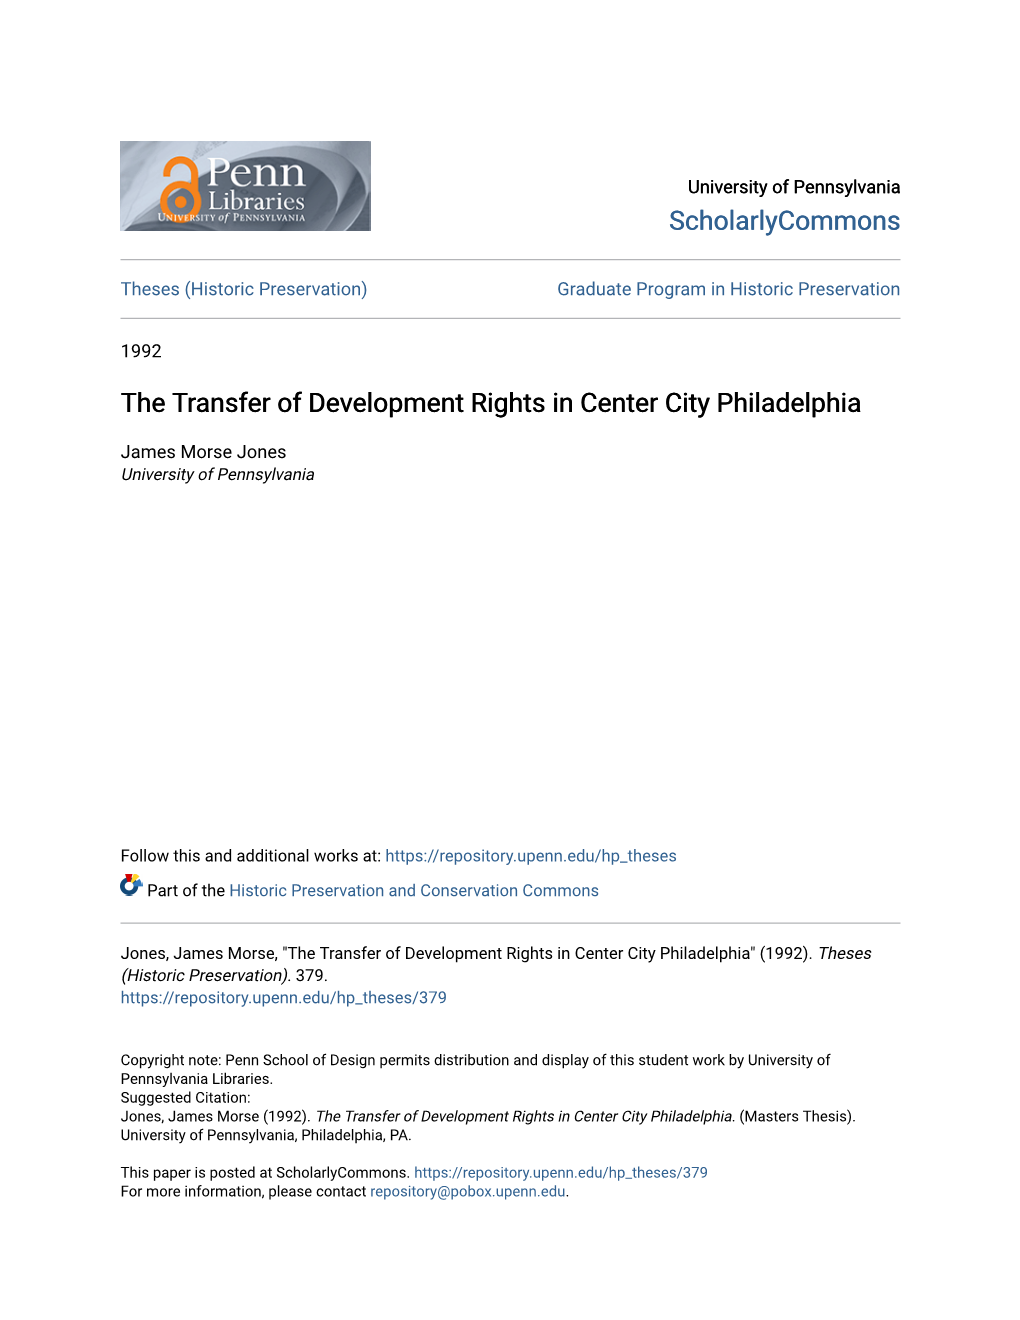 The Transfer of Development Rights in Center City Philadelphia